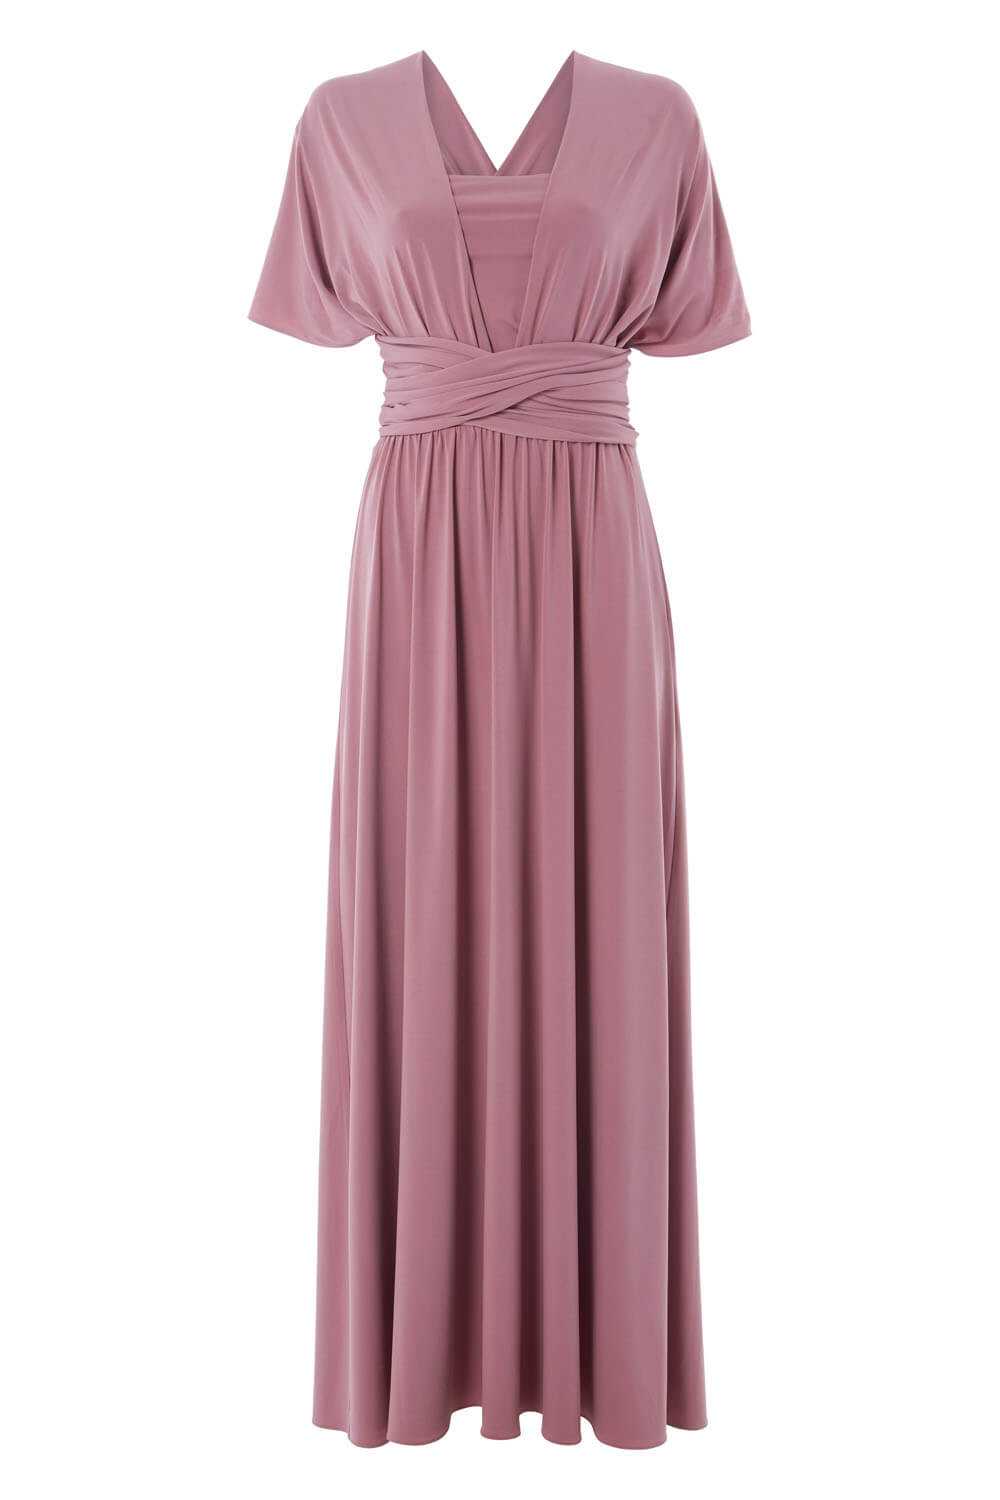 Rose Multiway Maxi Dress, Image 9 of 9